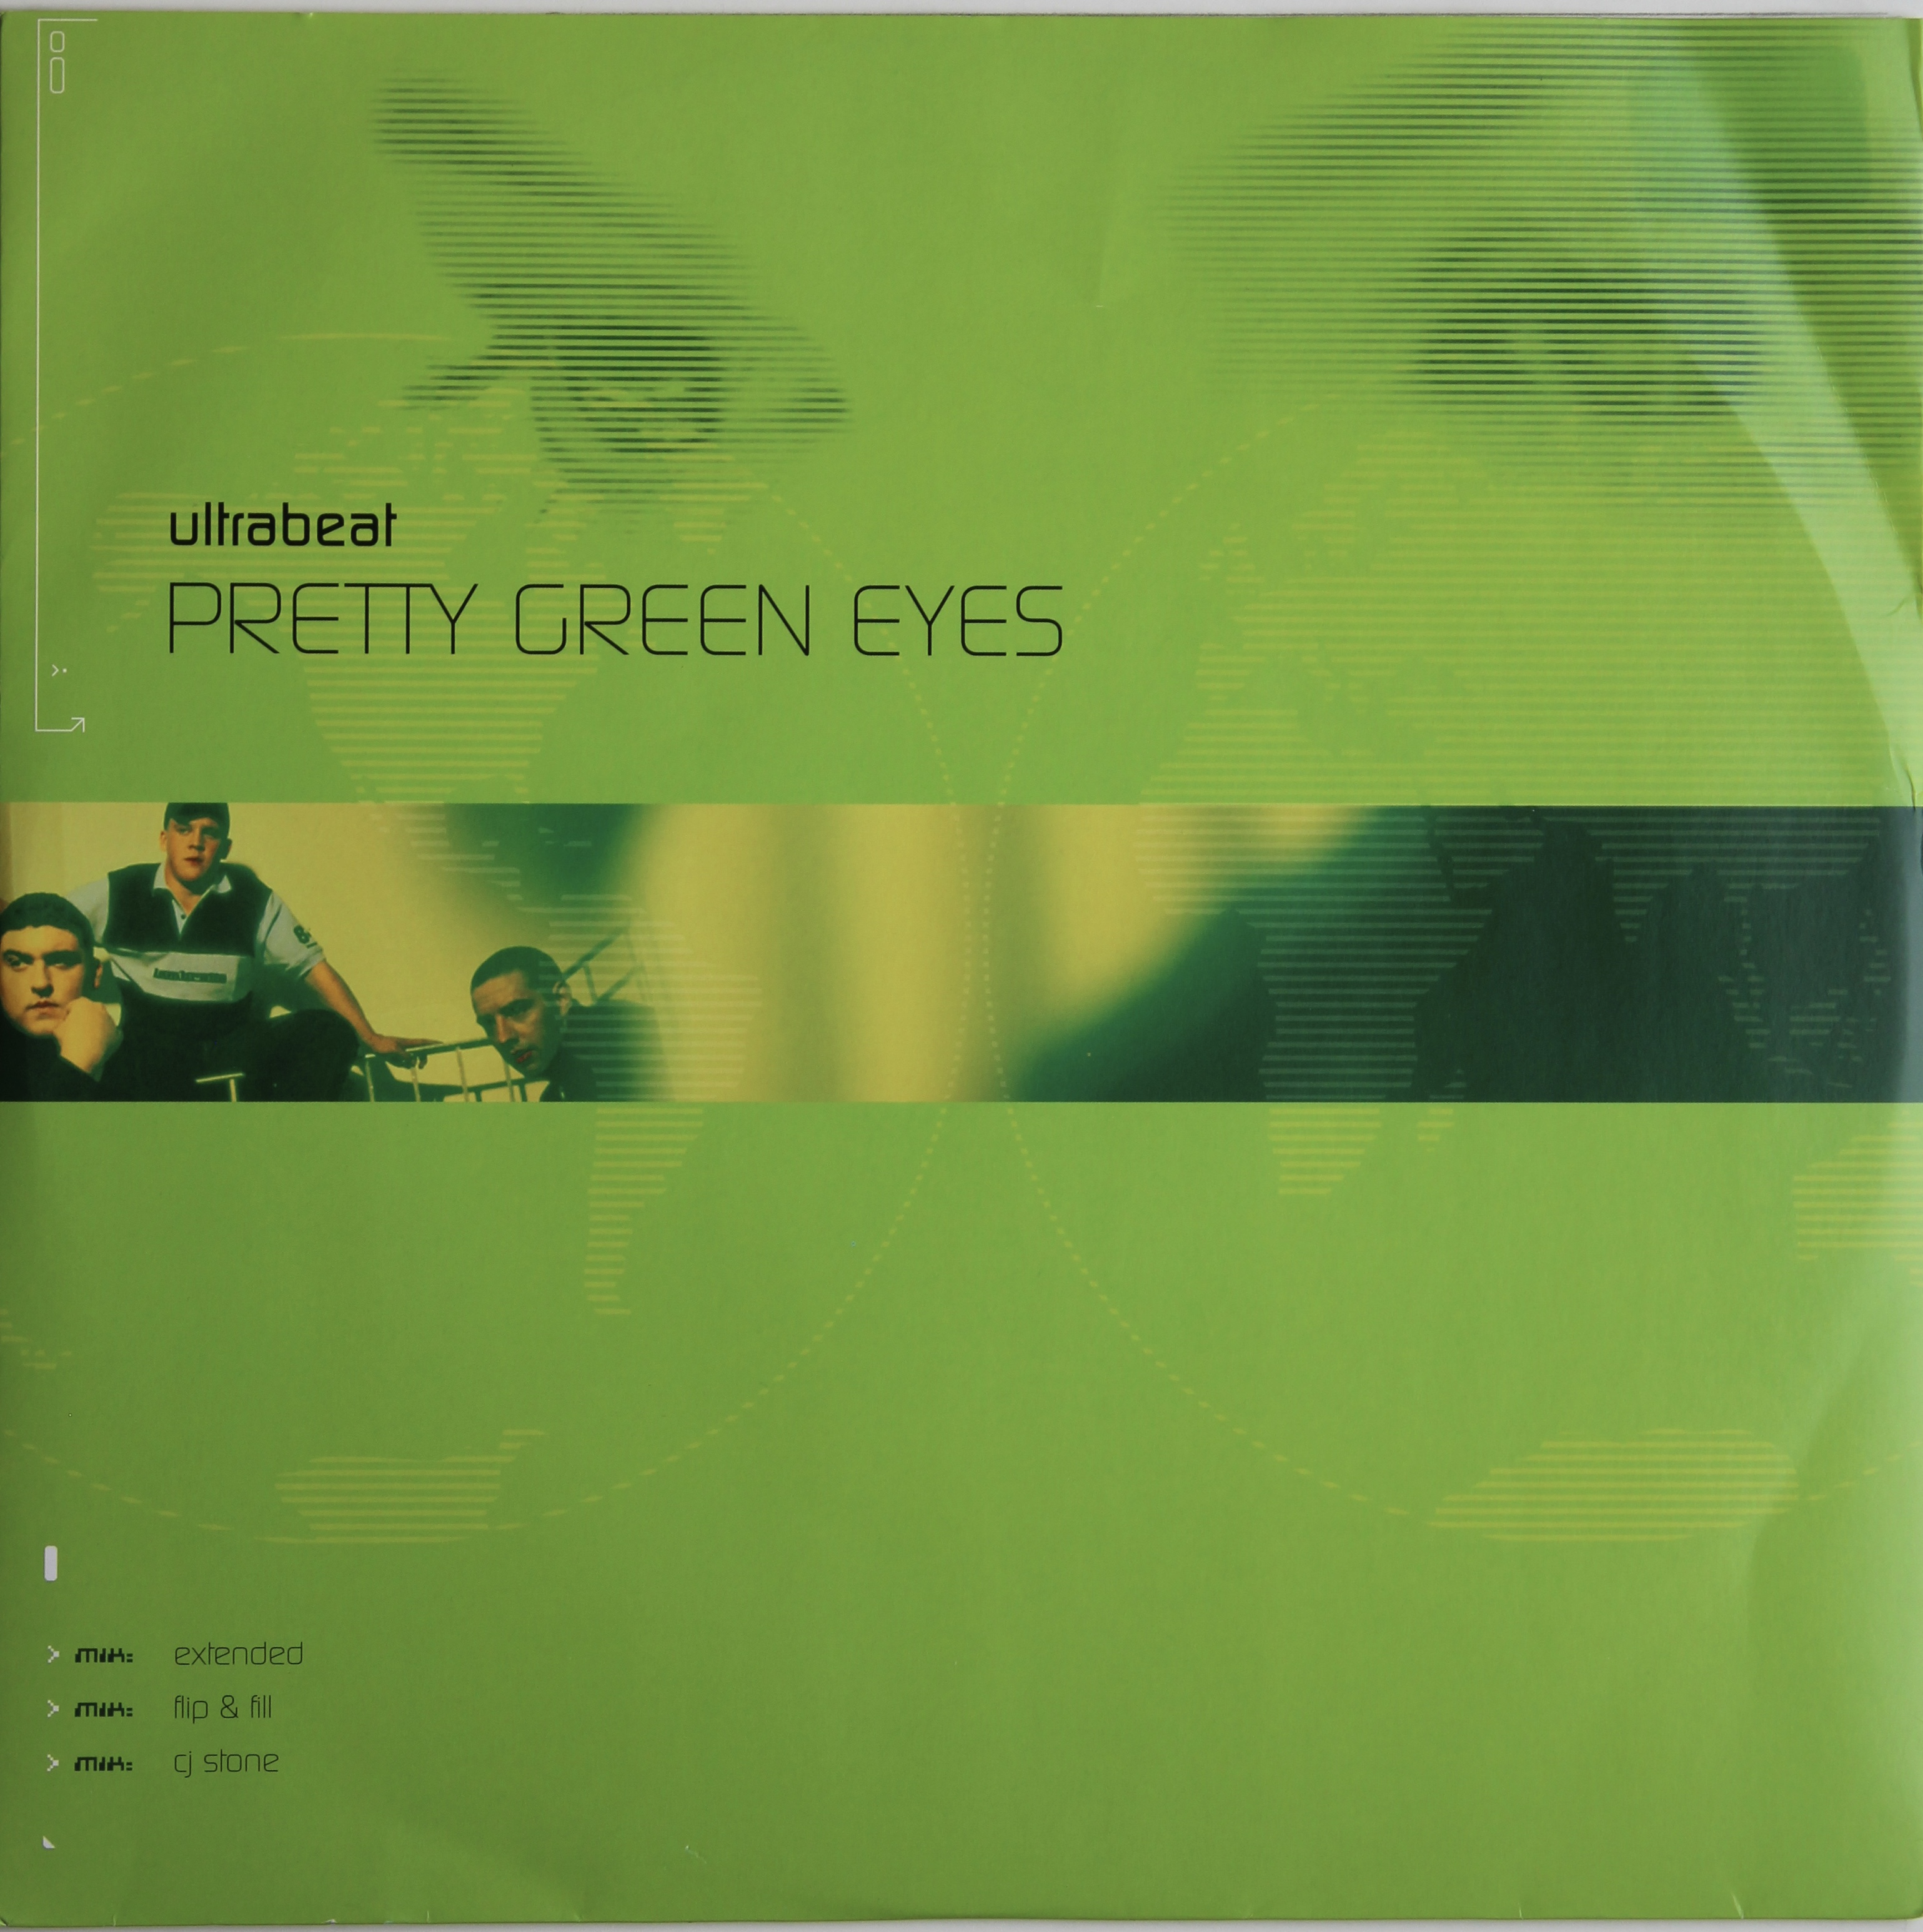 Green eyez pretty Pretty Green